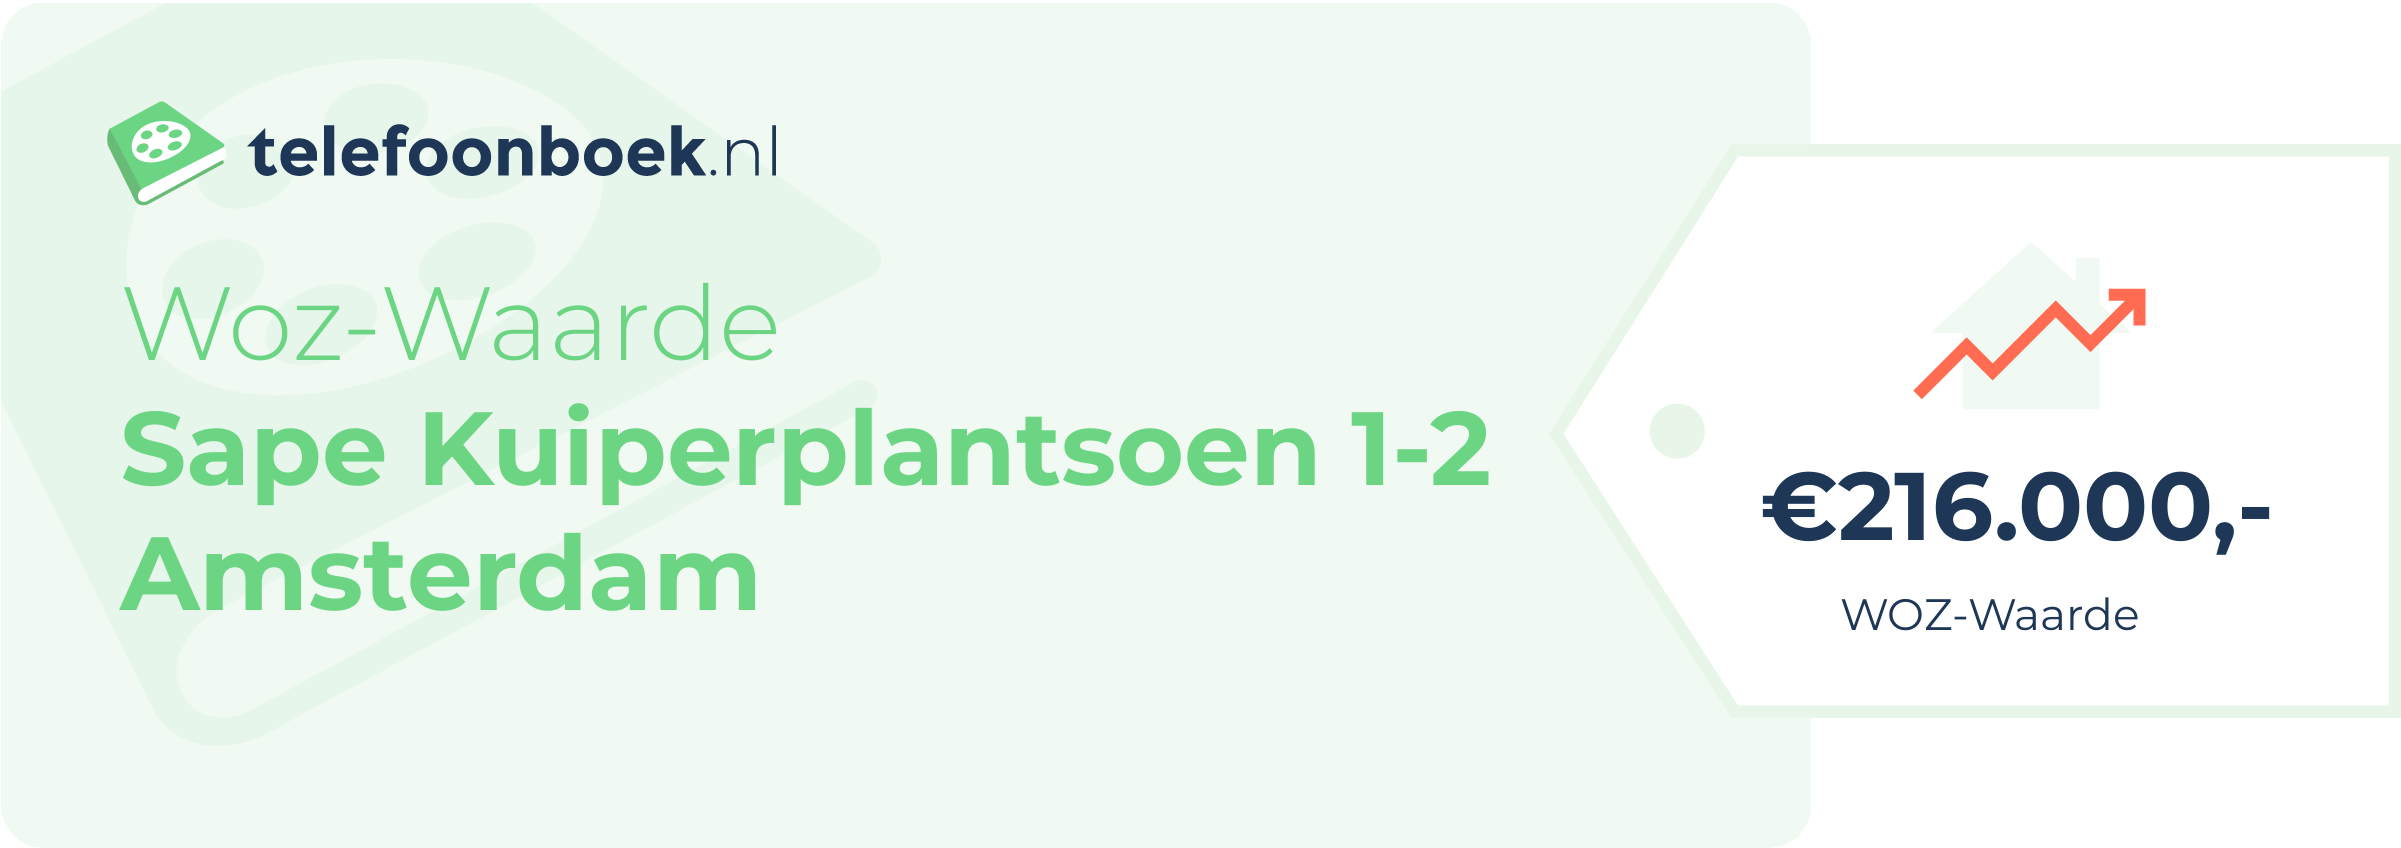 WOZ-waarde Sape Kuiperplantsoen 1-2 Amsterdam